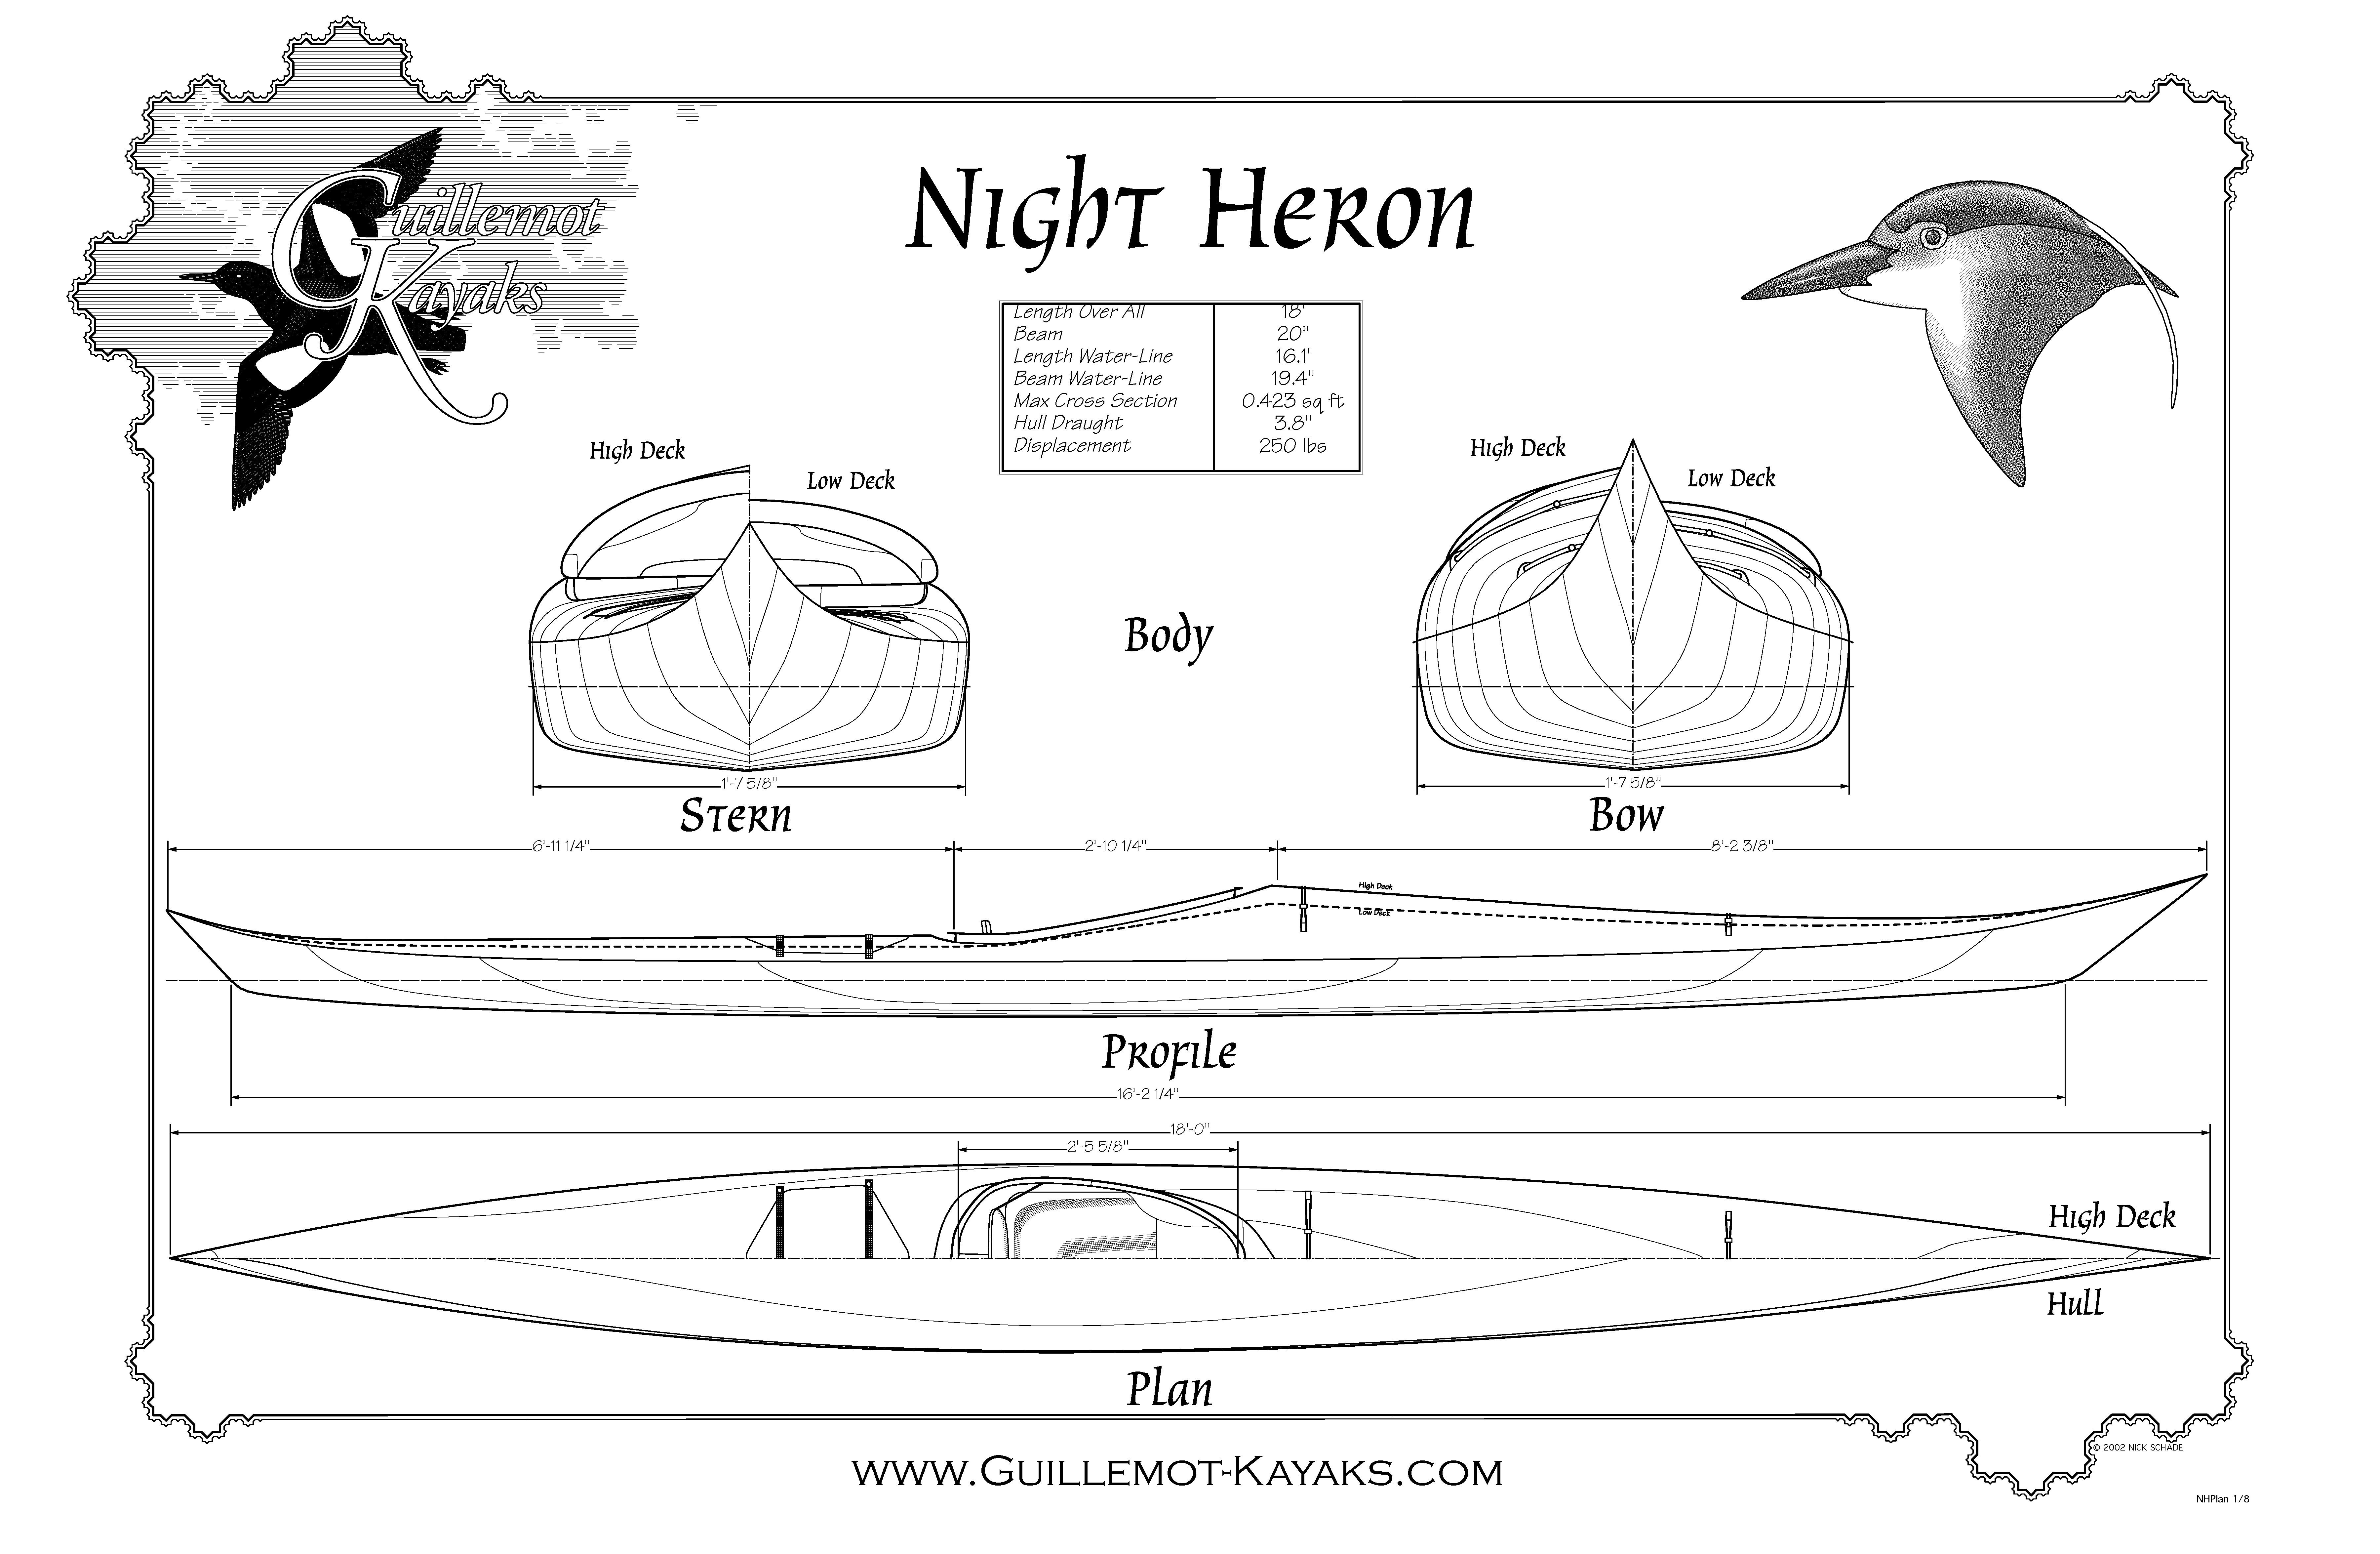 Night Heron Plans